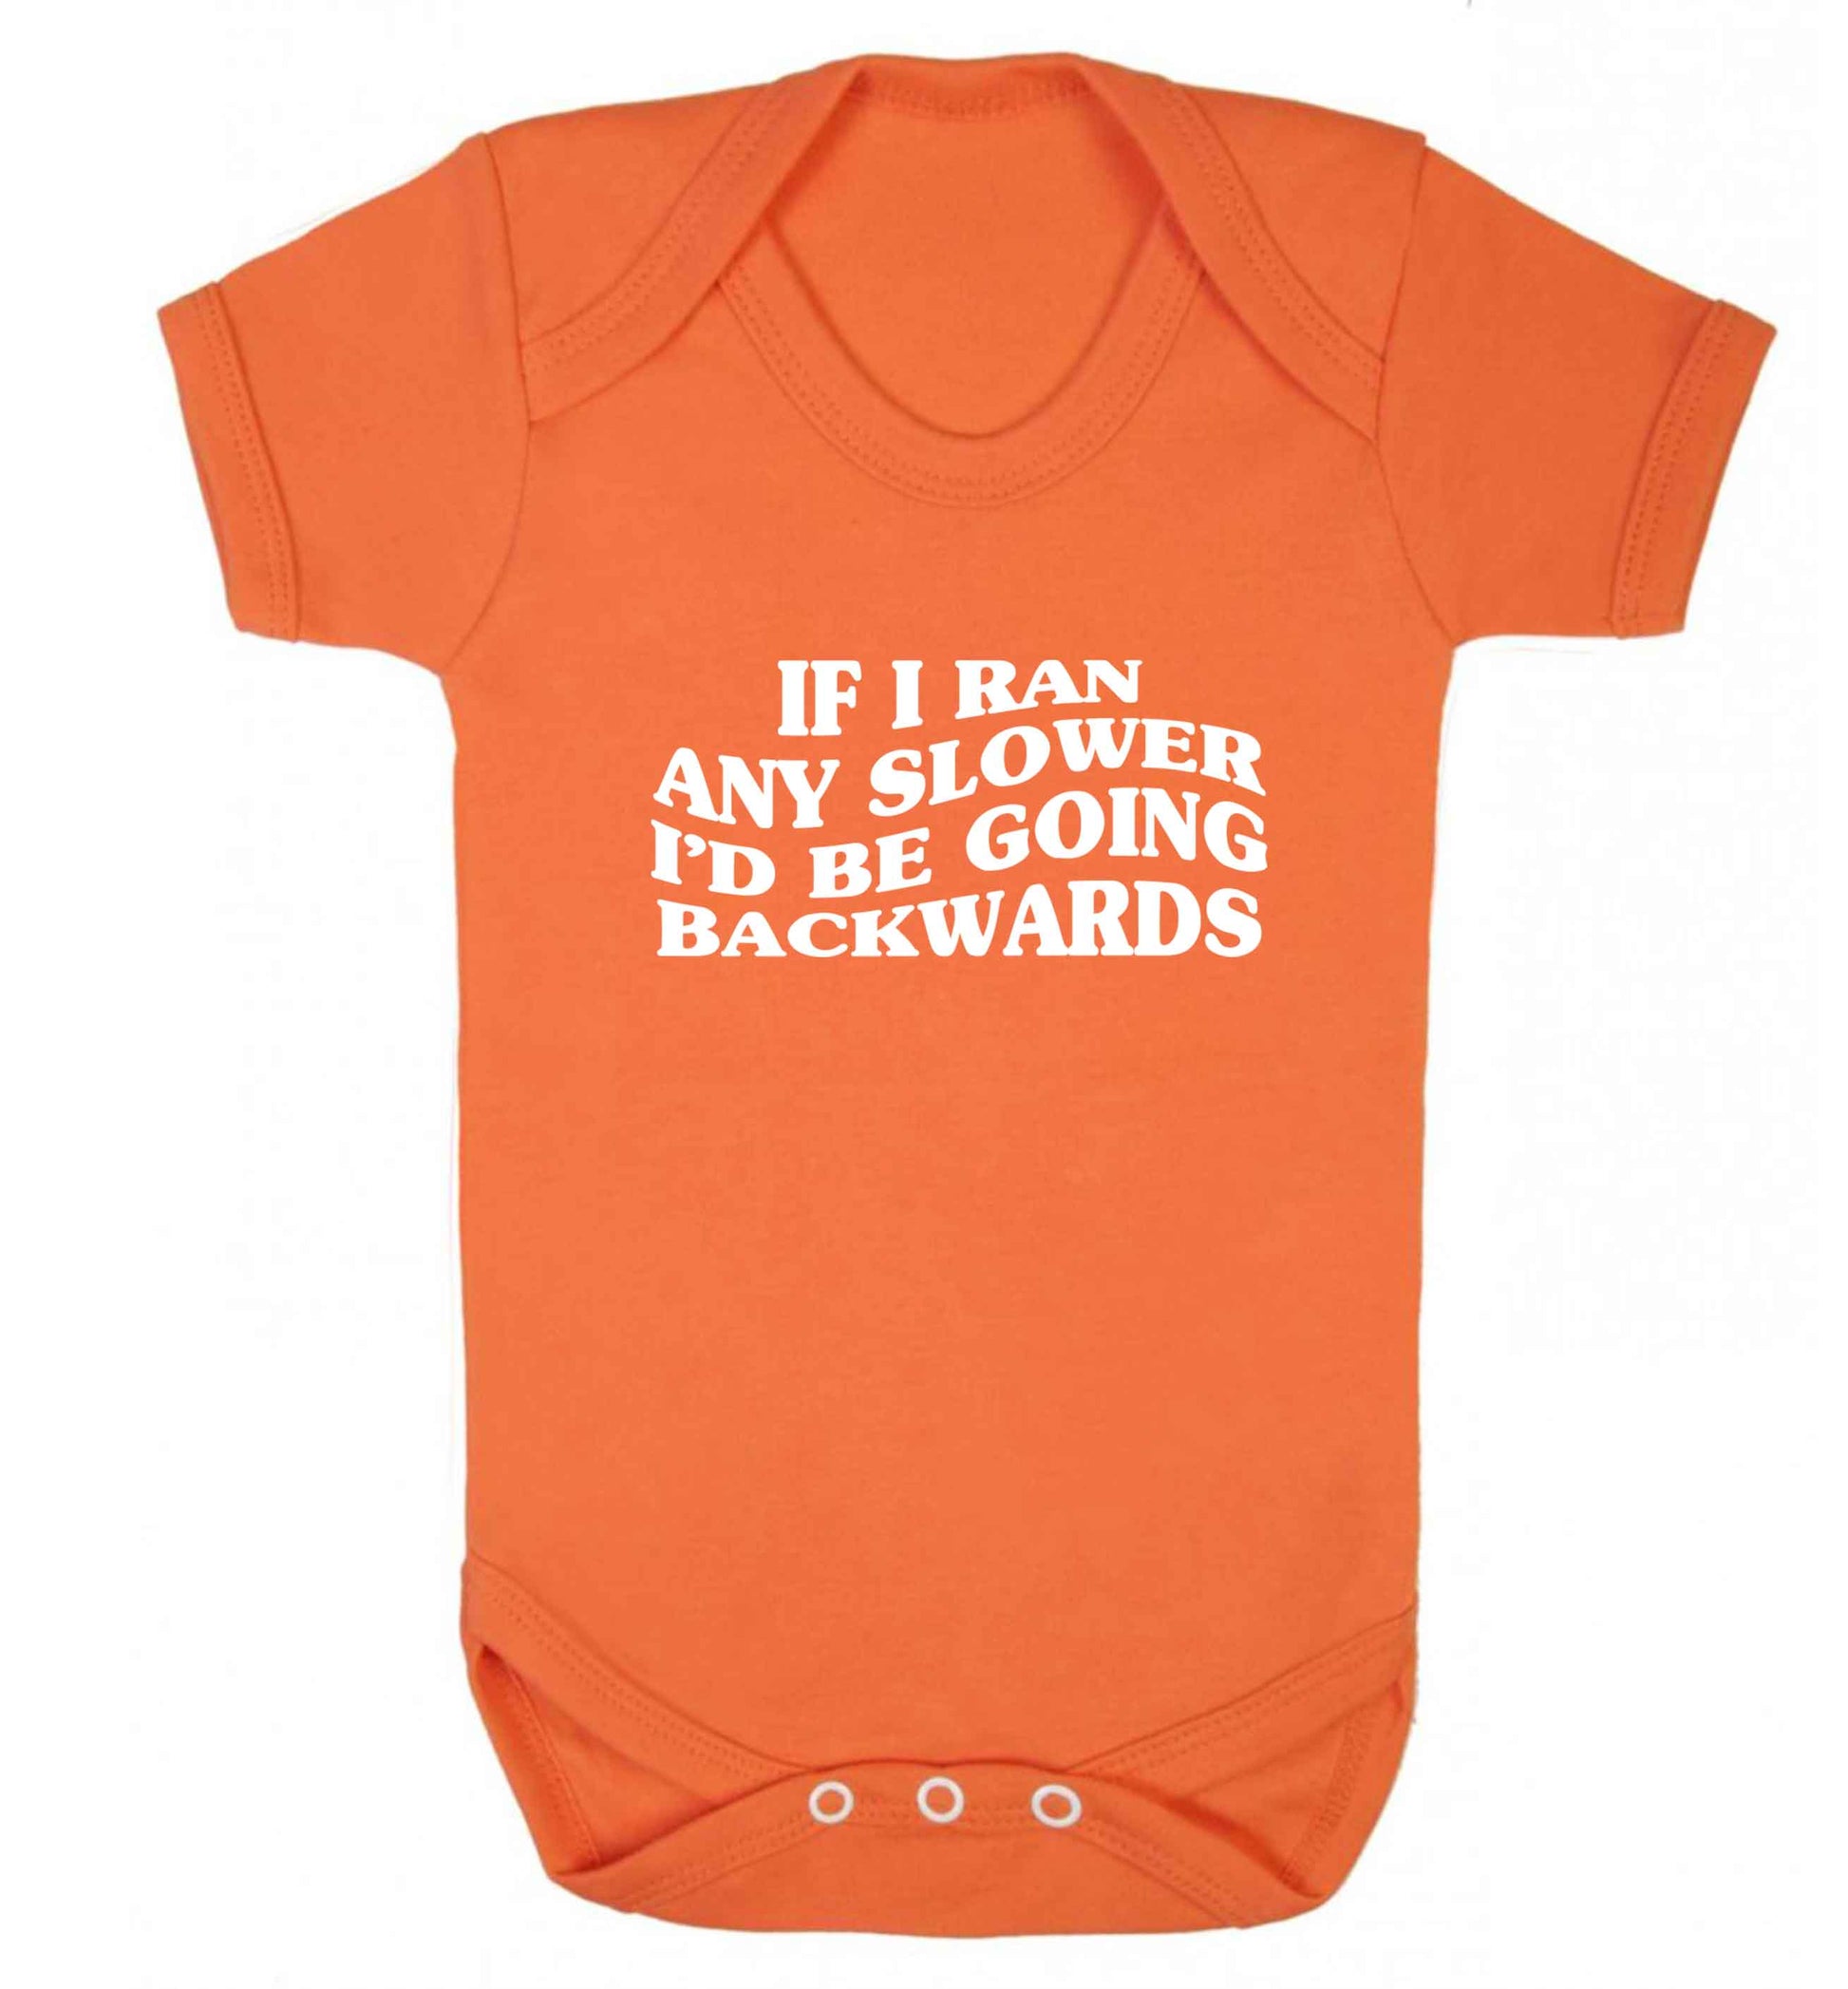 If I ran any slower I'd be going backwards baby vest orange 18-24 months